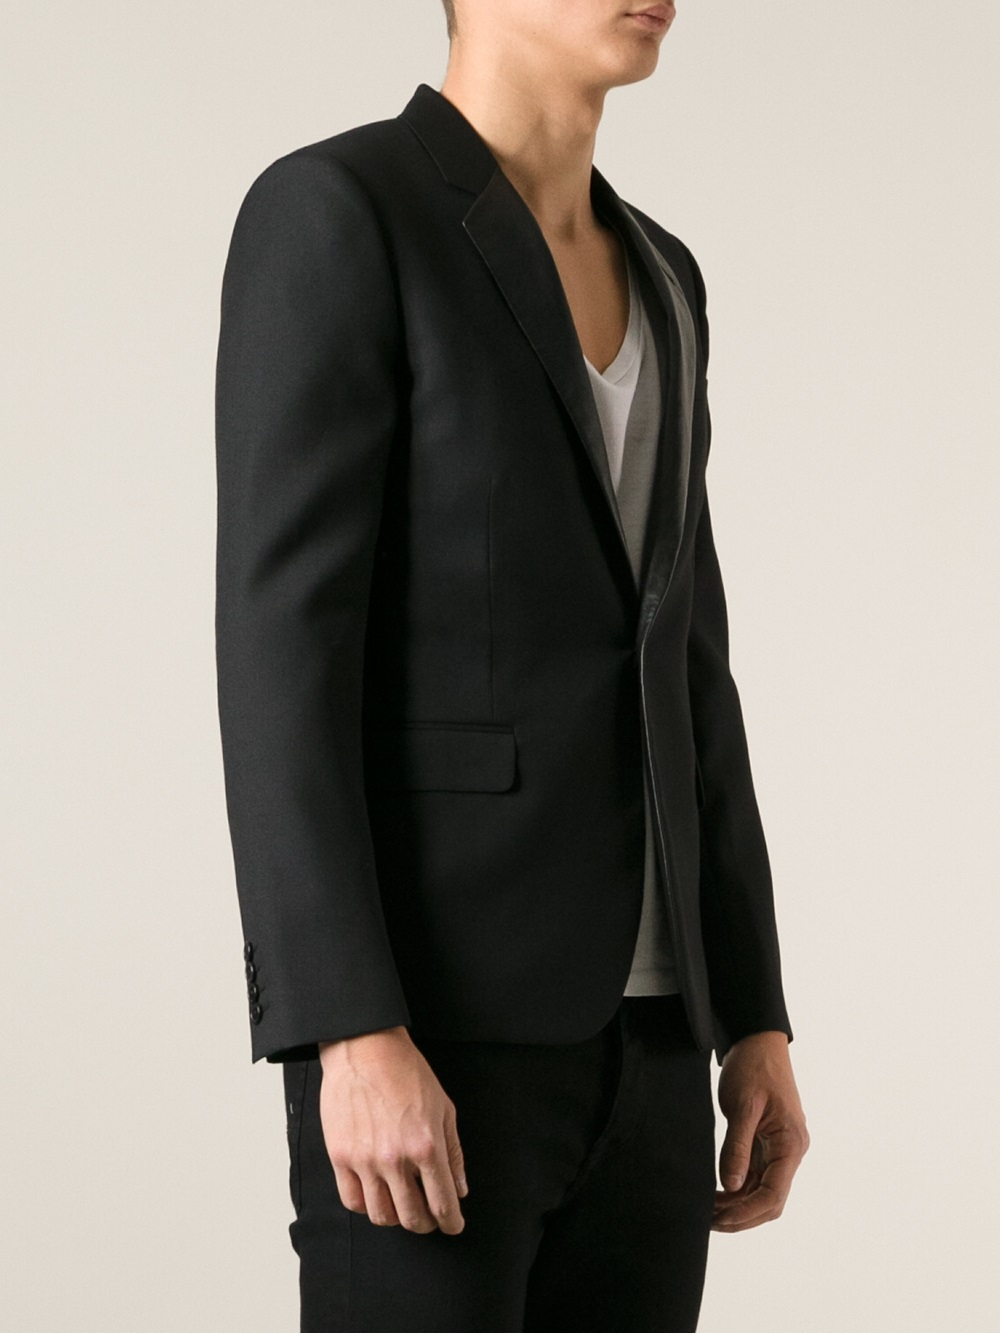 Lyst - Saint Laurent Leather Collar Blazer in Black for Men